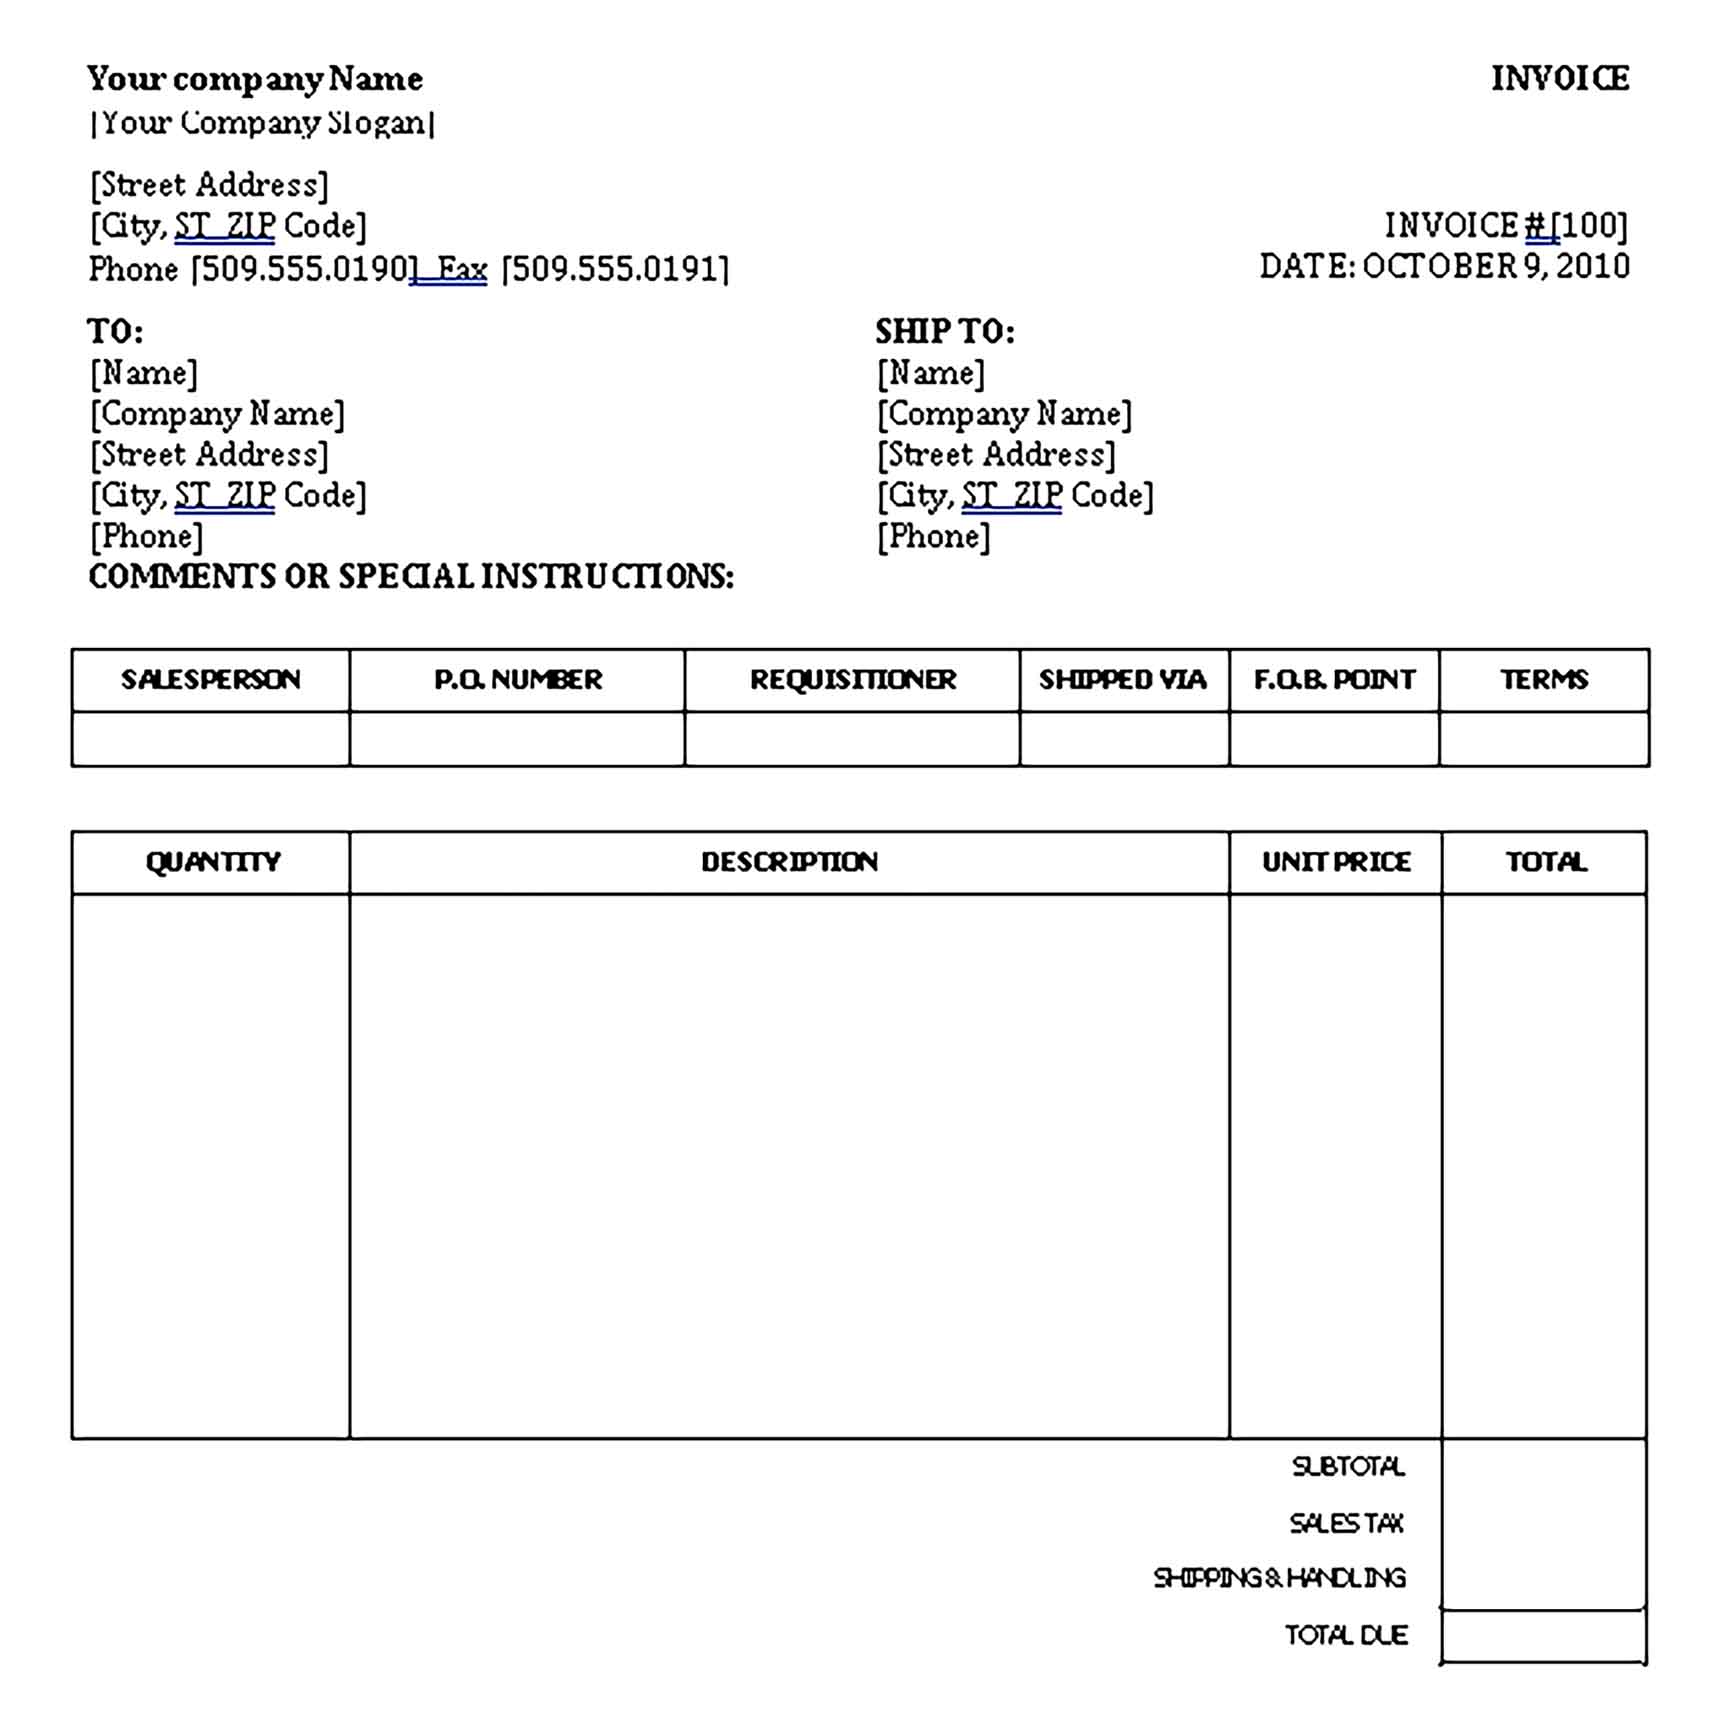 Sample Templates pdf invoiceberry invoice 1